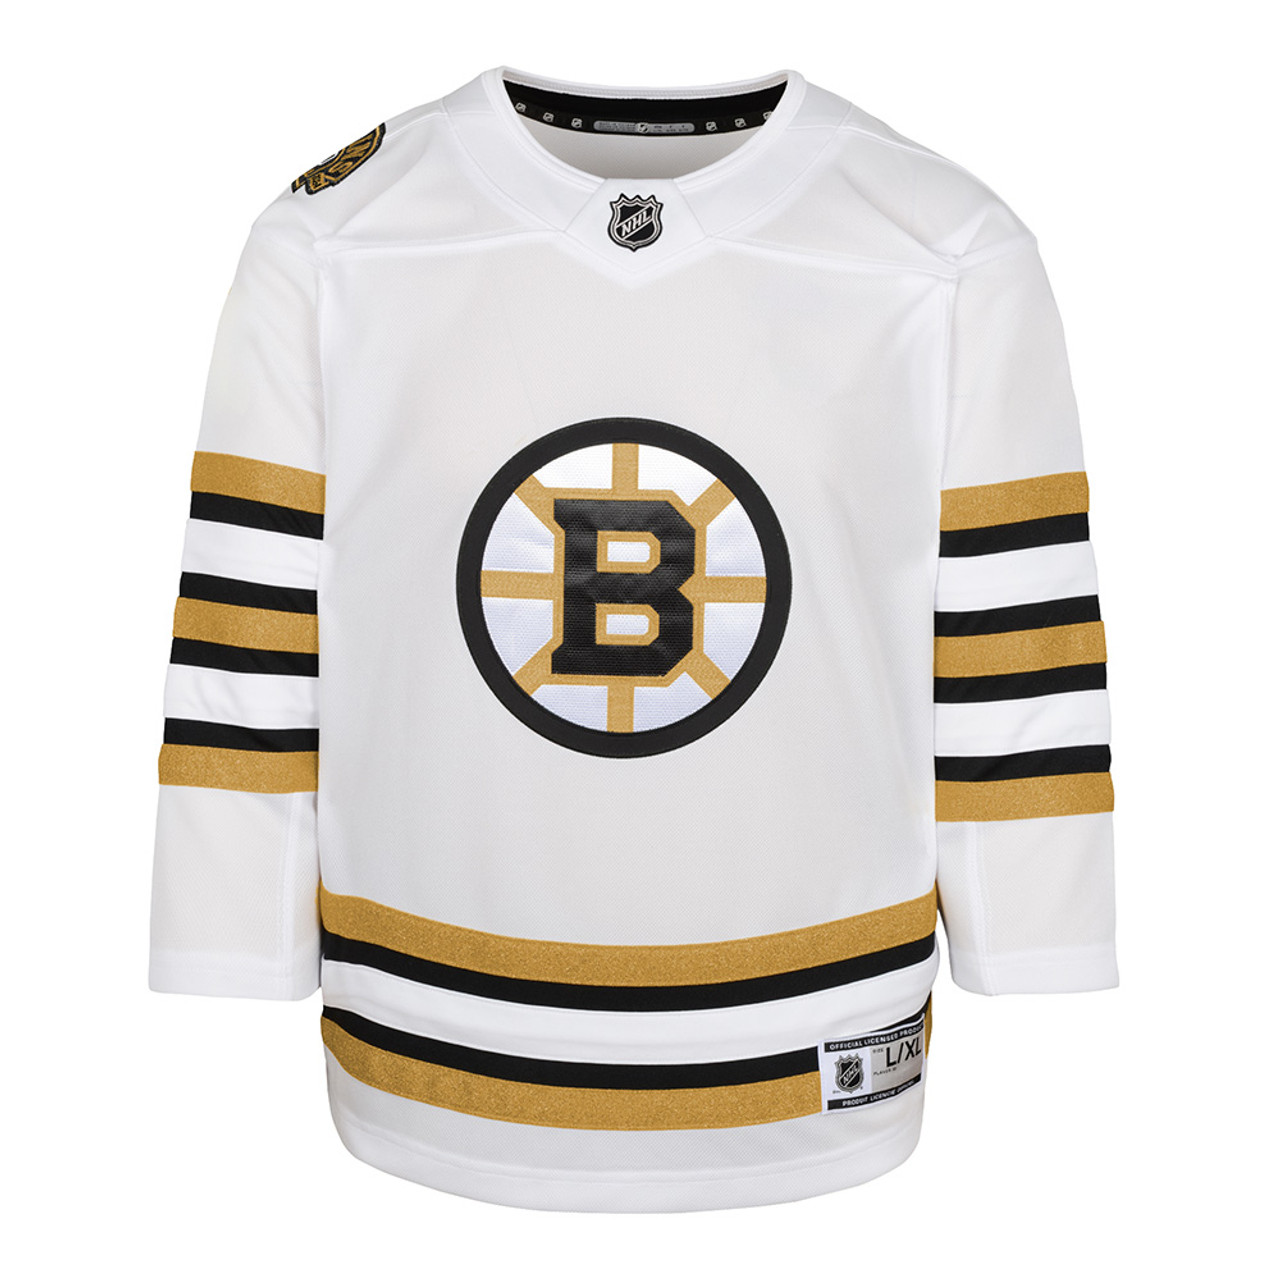 Kids Boston Bruins Gear, Youth Bruins Apparel, Merchandise